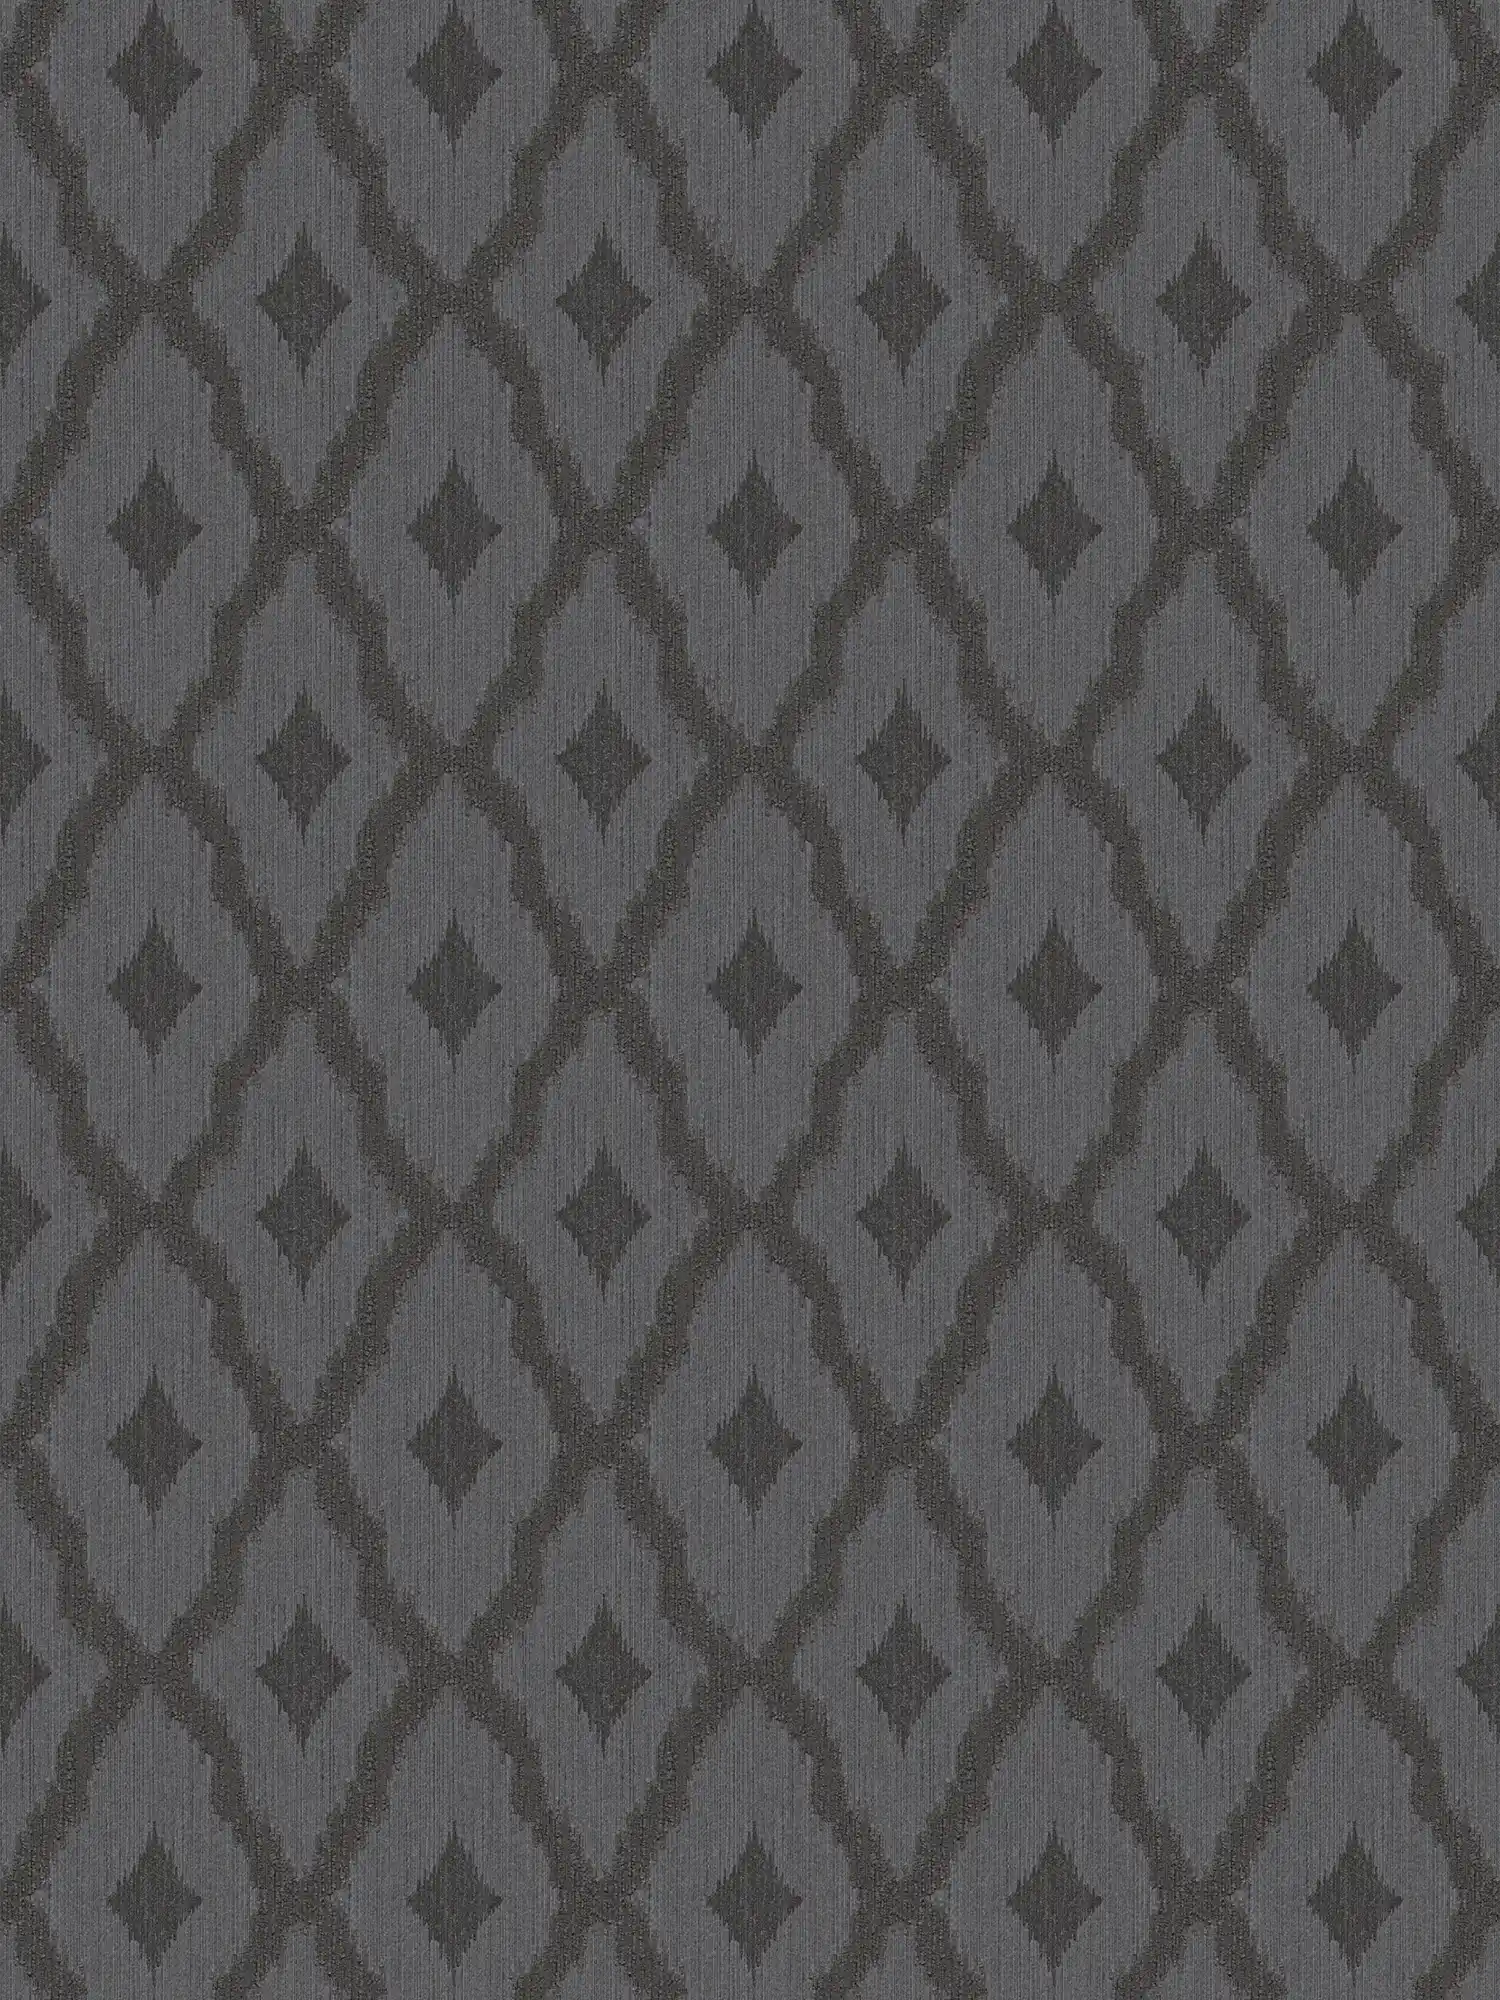 Mustertapete im Ikat Stil mit Textilstruktur – Braun
